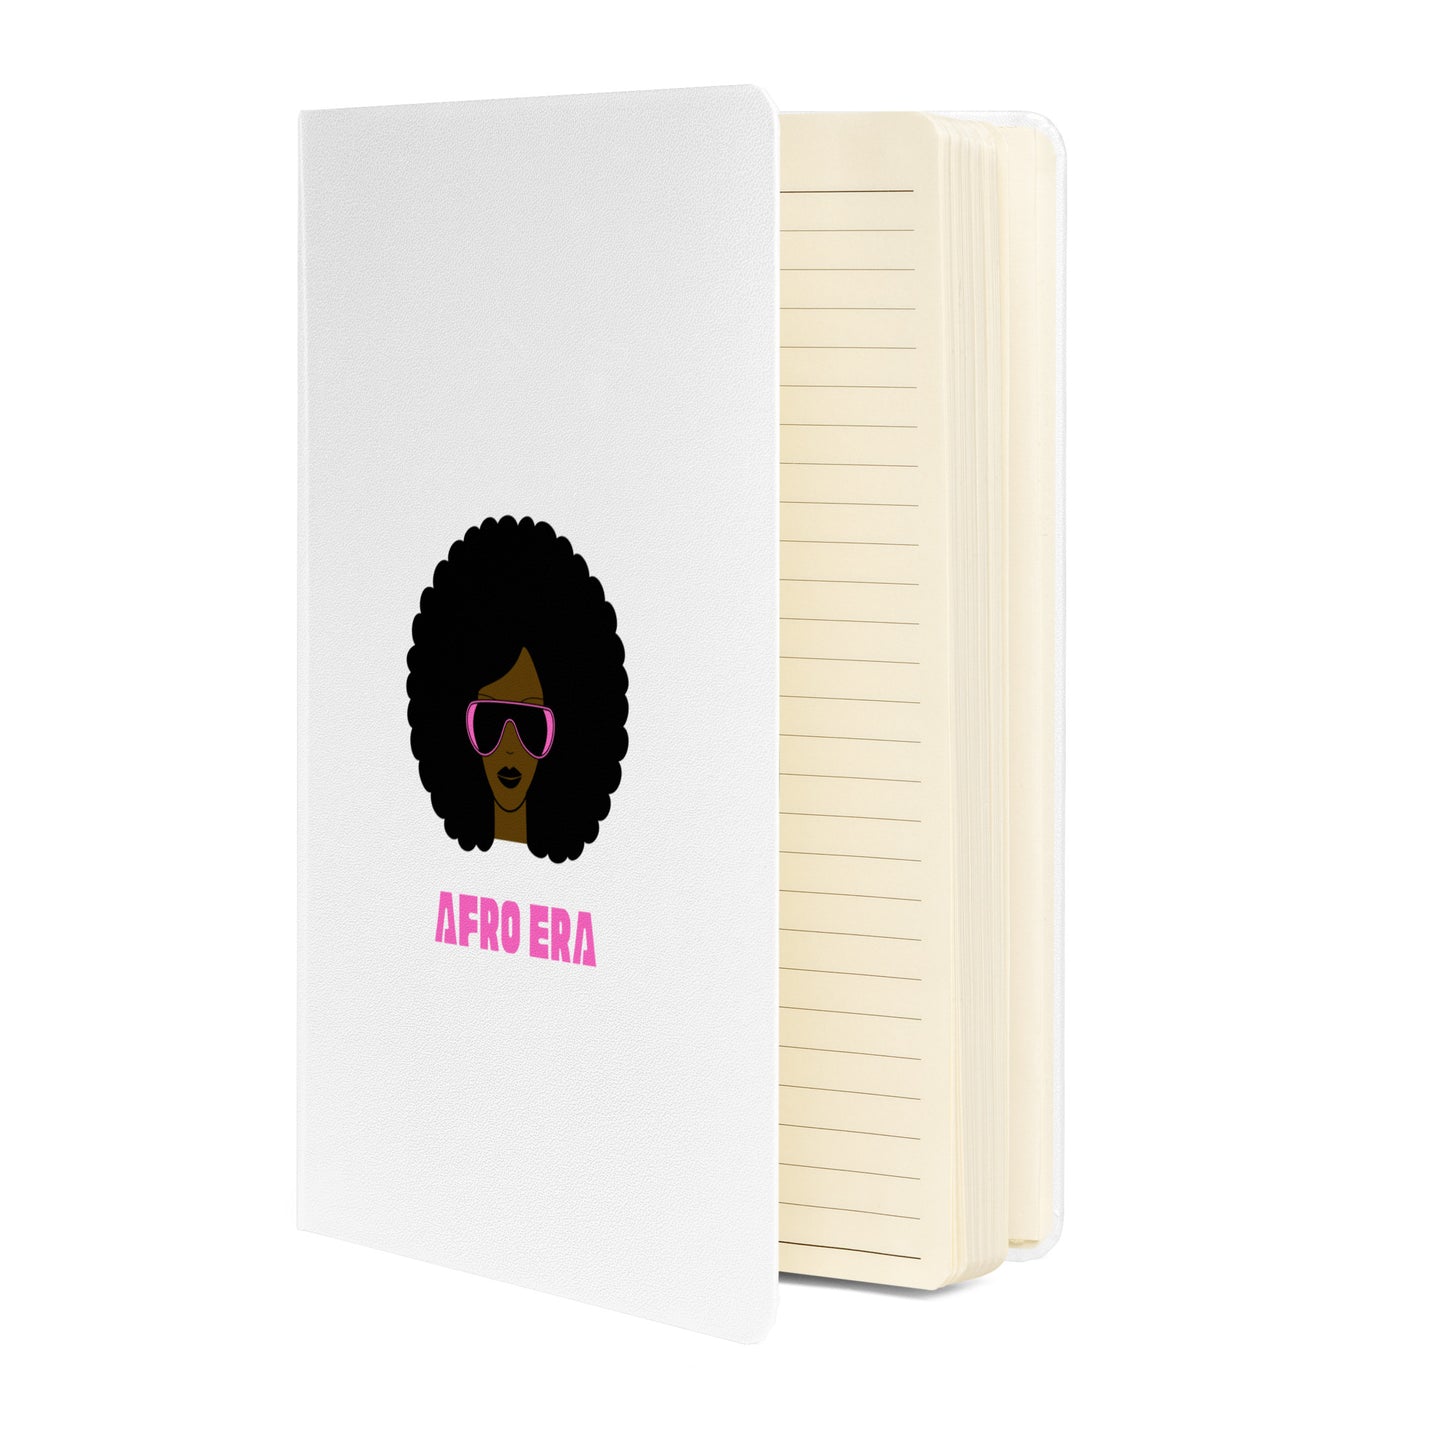 AFRO ERA Hardcover bound notebook